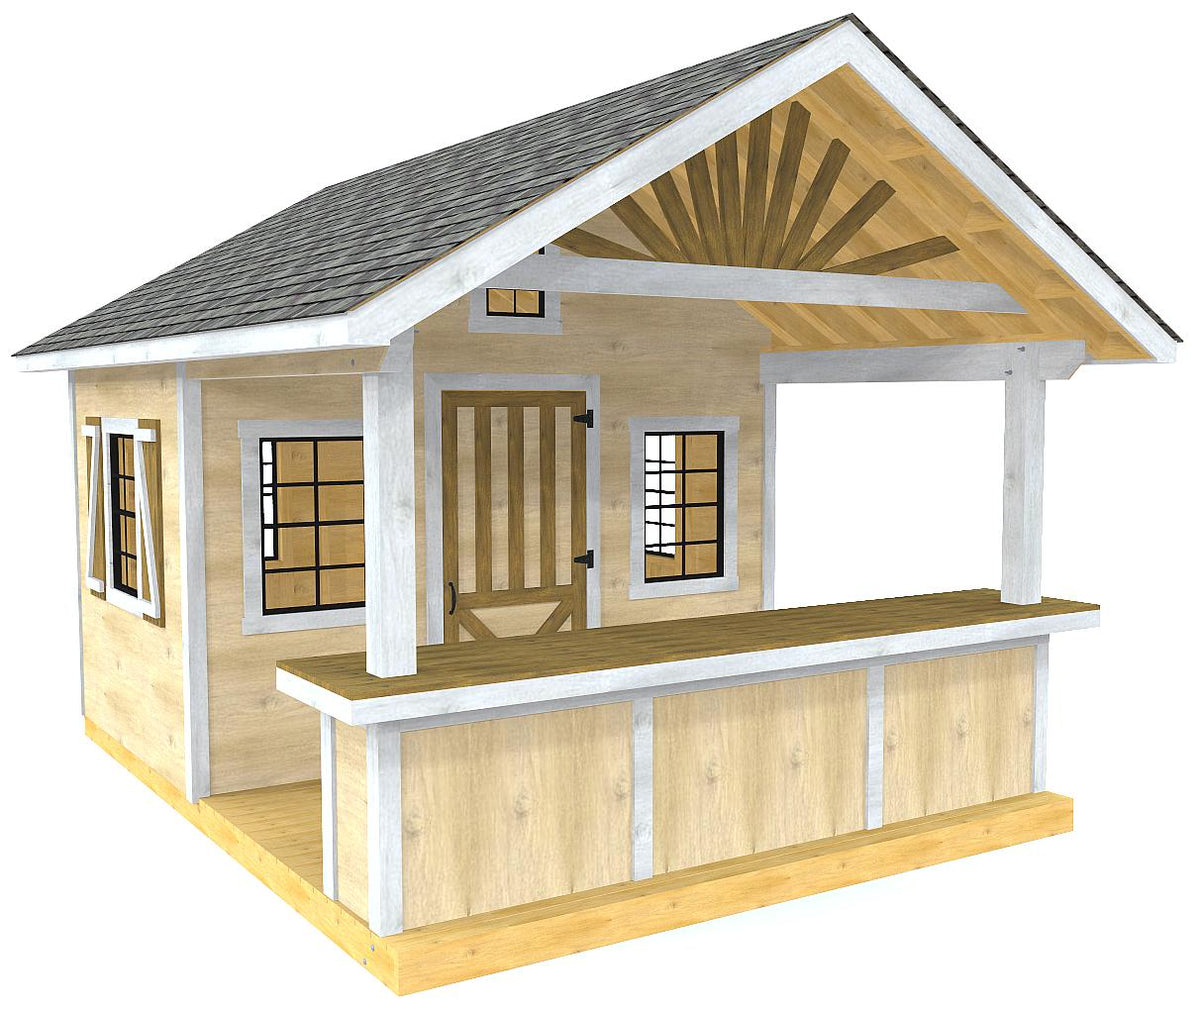 12x16 brayton shed plan porch & bar design – paul's sheds